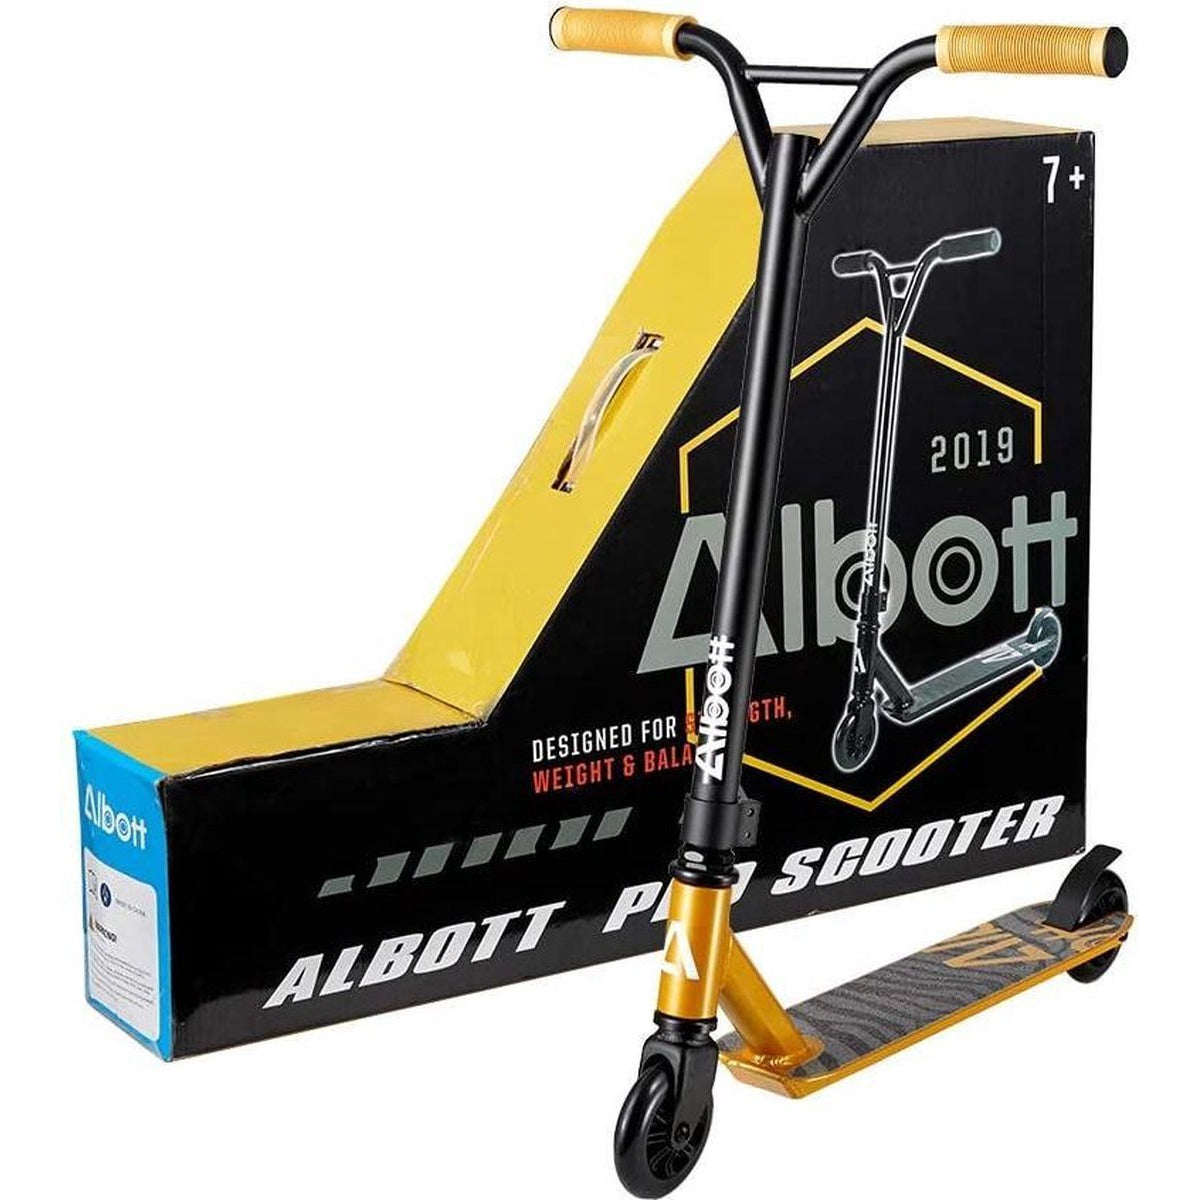 Albott - Pro Stunt Step - Goud - Aluminium - 100mm Wielen - ABEC 9 Lagers - Scooter - Freestyle Street - 8+ leeftijd